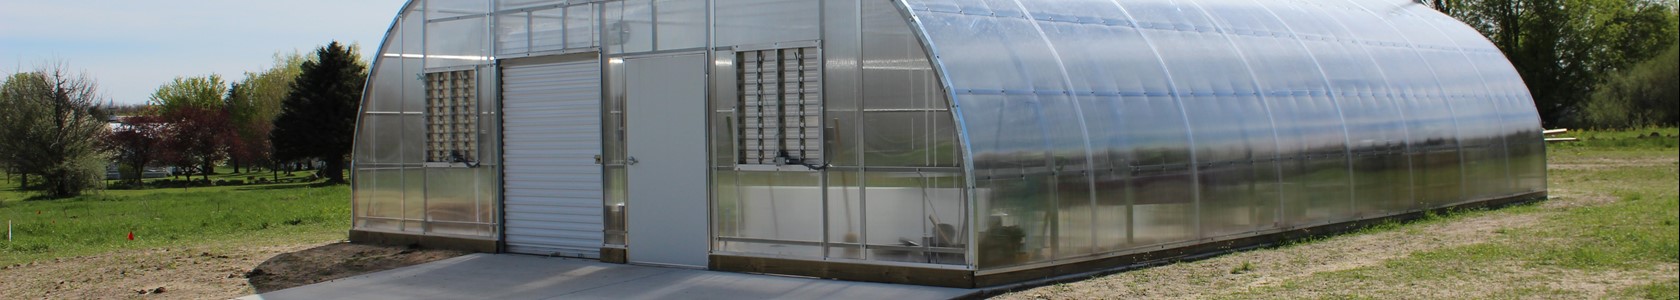 MCC's Sidney campus greenhouse